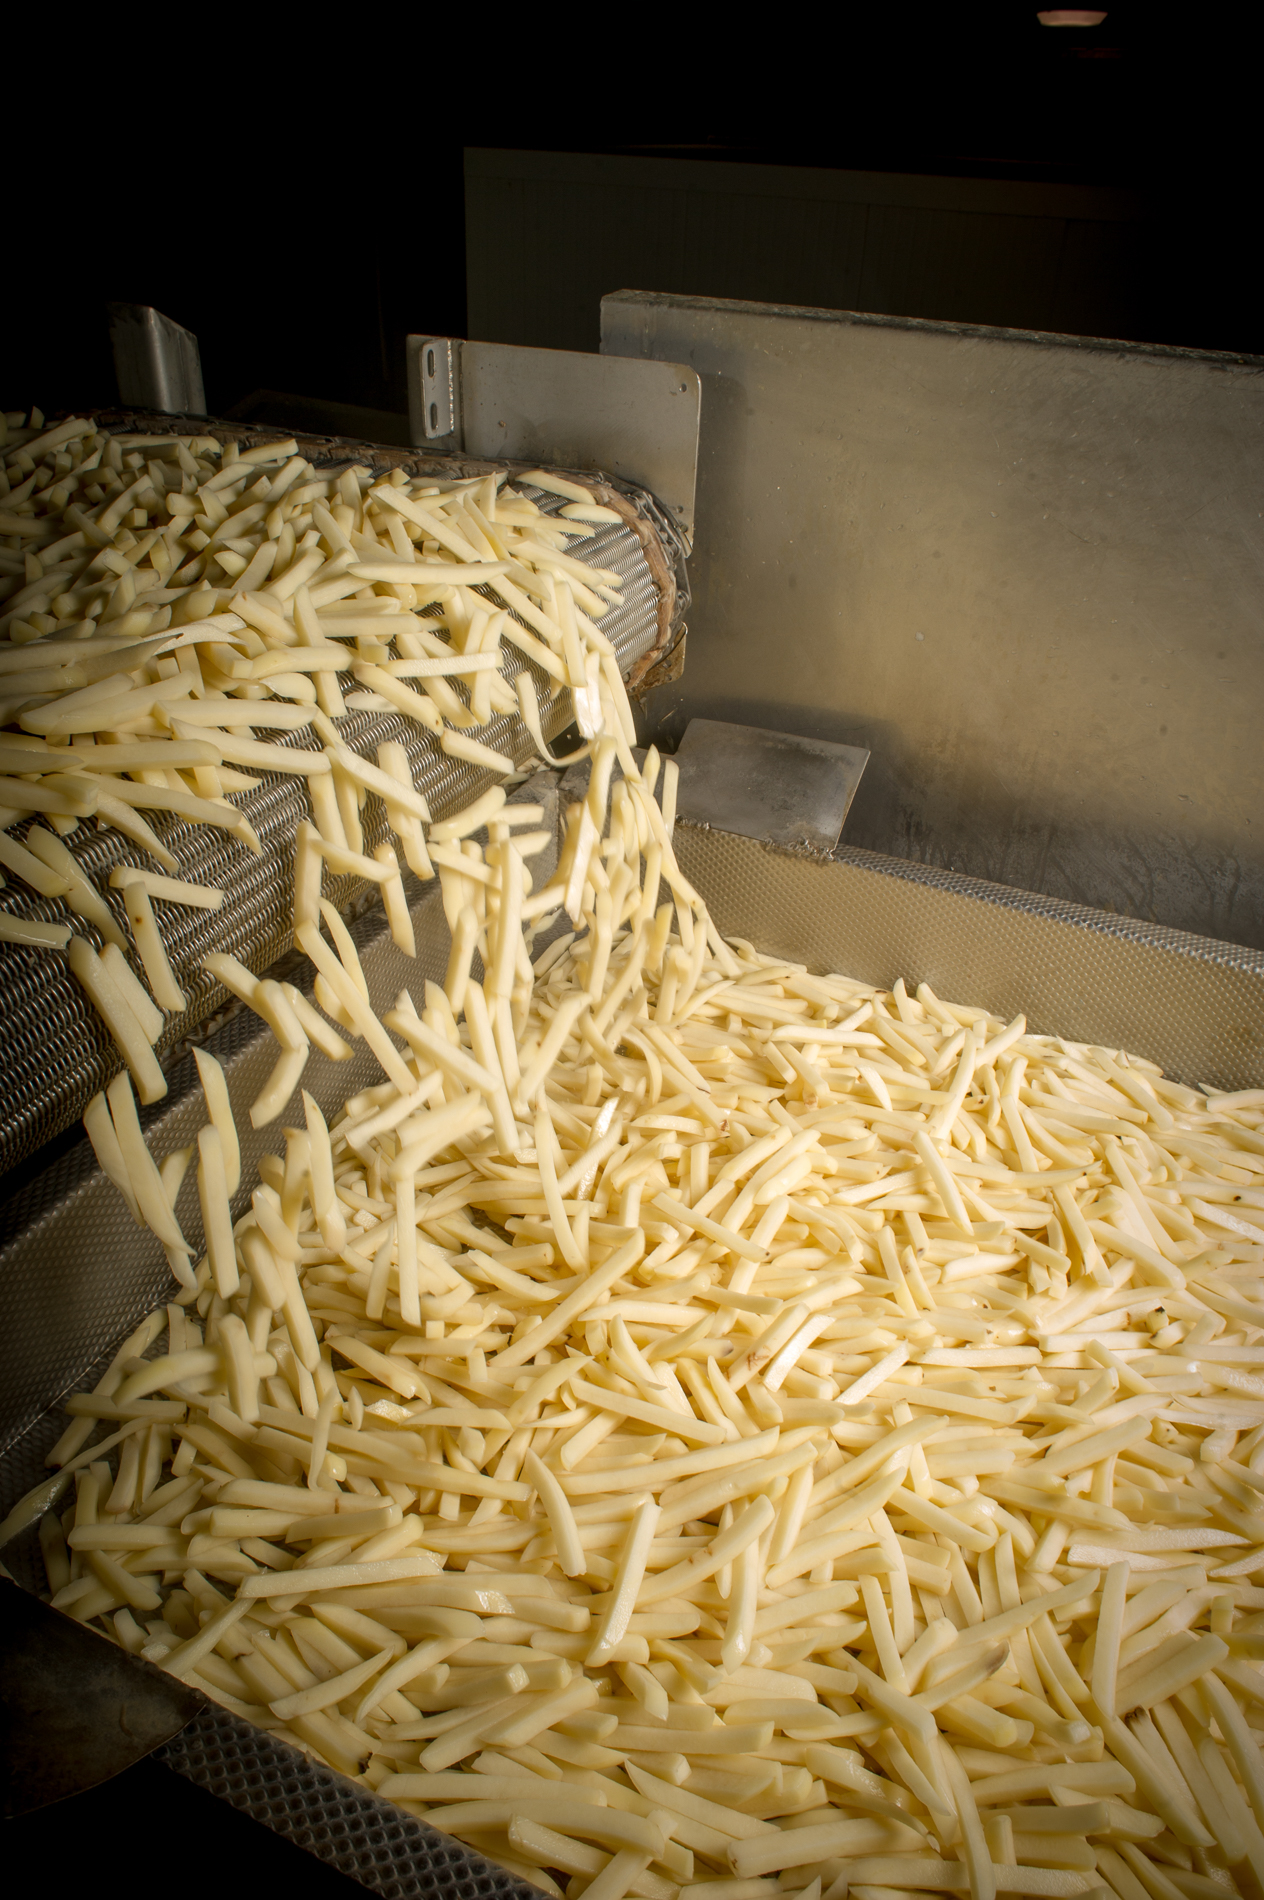 Fries entering blancher. Production shots.